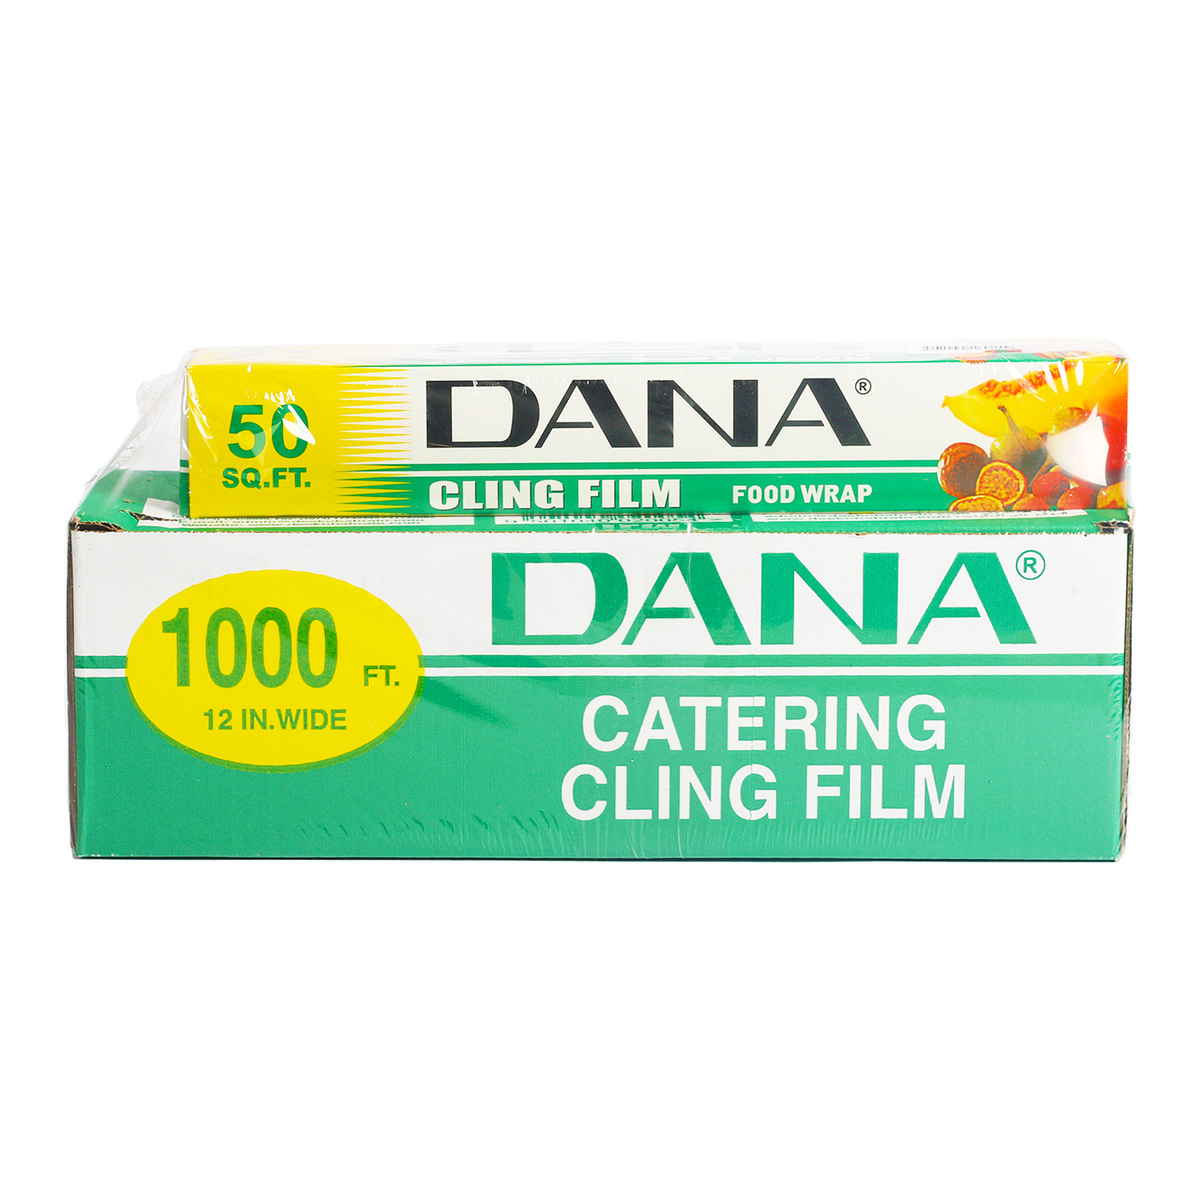 Dana Catering Cling Film 1000ft + 50sq.ft 1 pc